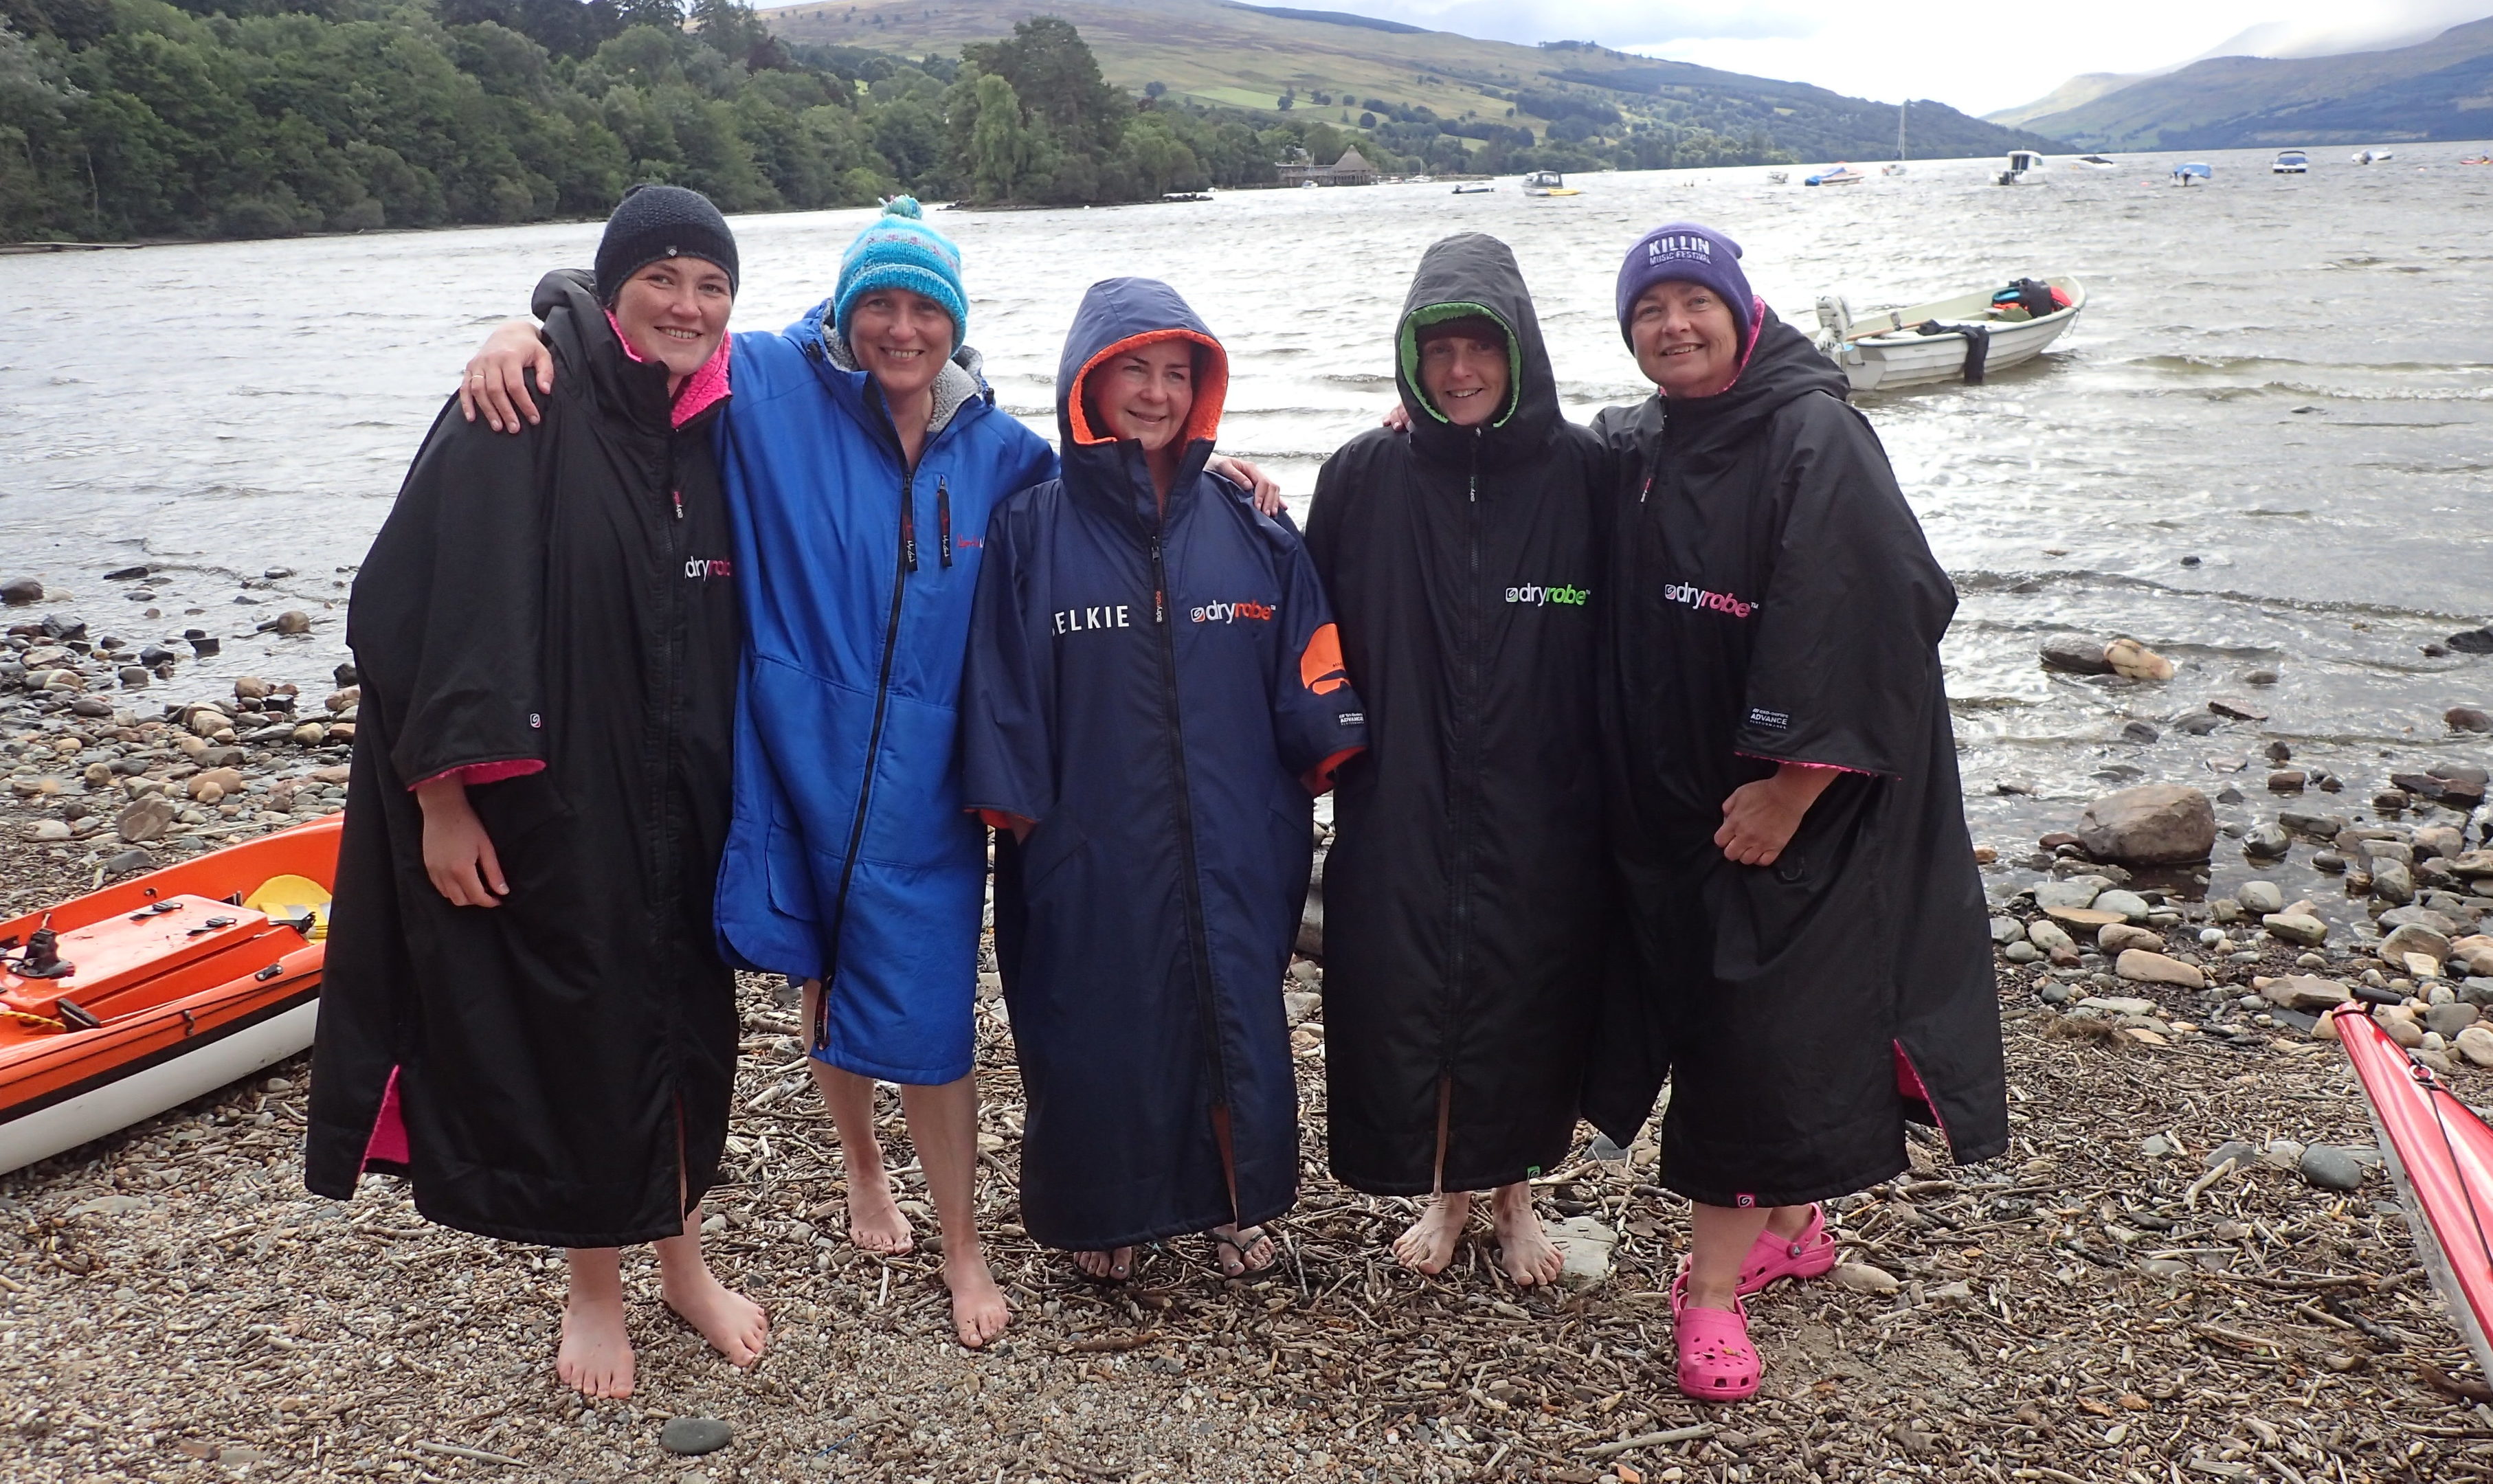 Liz Stevens, Helen Cole, Theresa Elliot, Ishbel Hayes and Angela Steel  at the end of their swim.